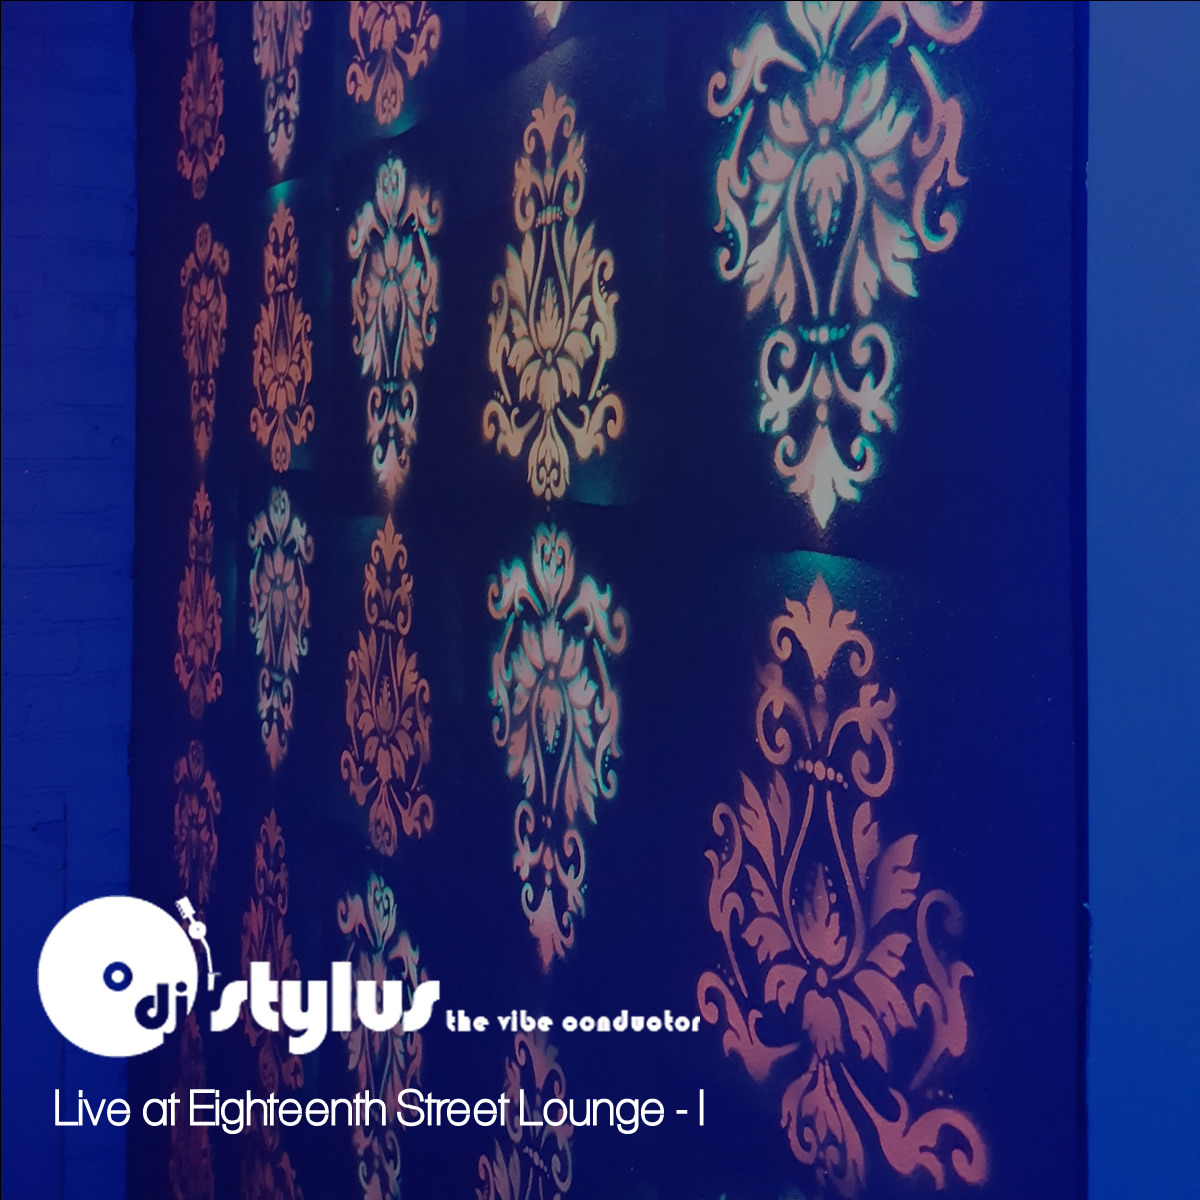 DJ Stylus The Vibe Conductor - Live at Eighteenth Street Lounge, Vol. 1